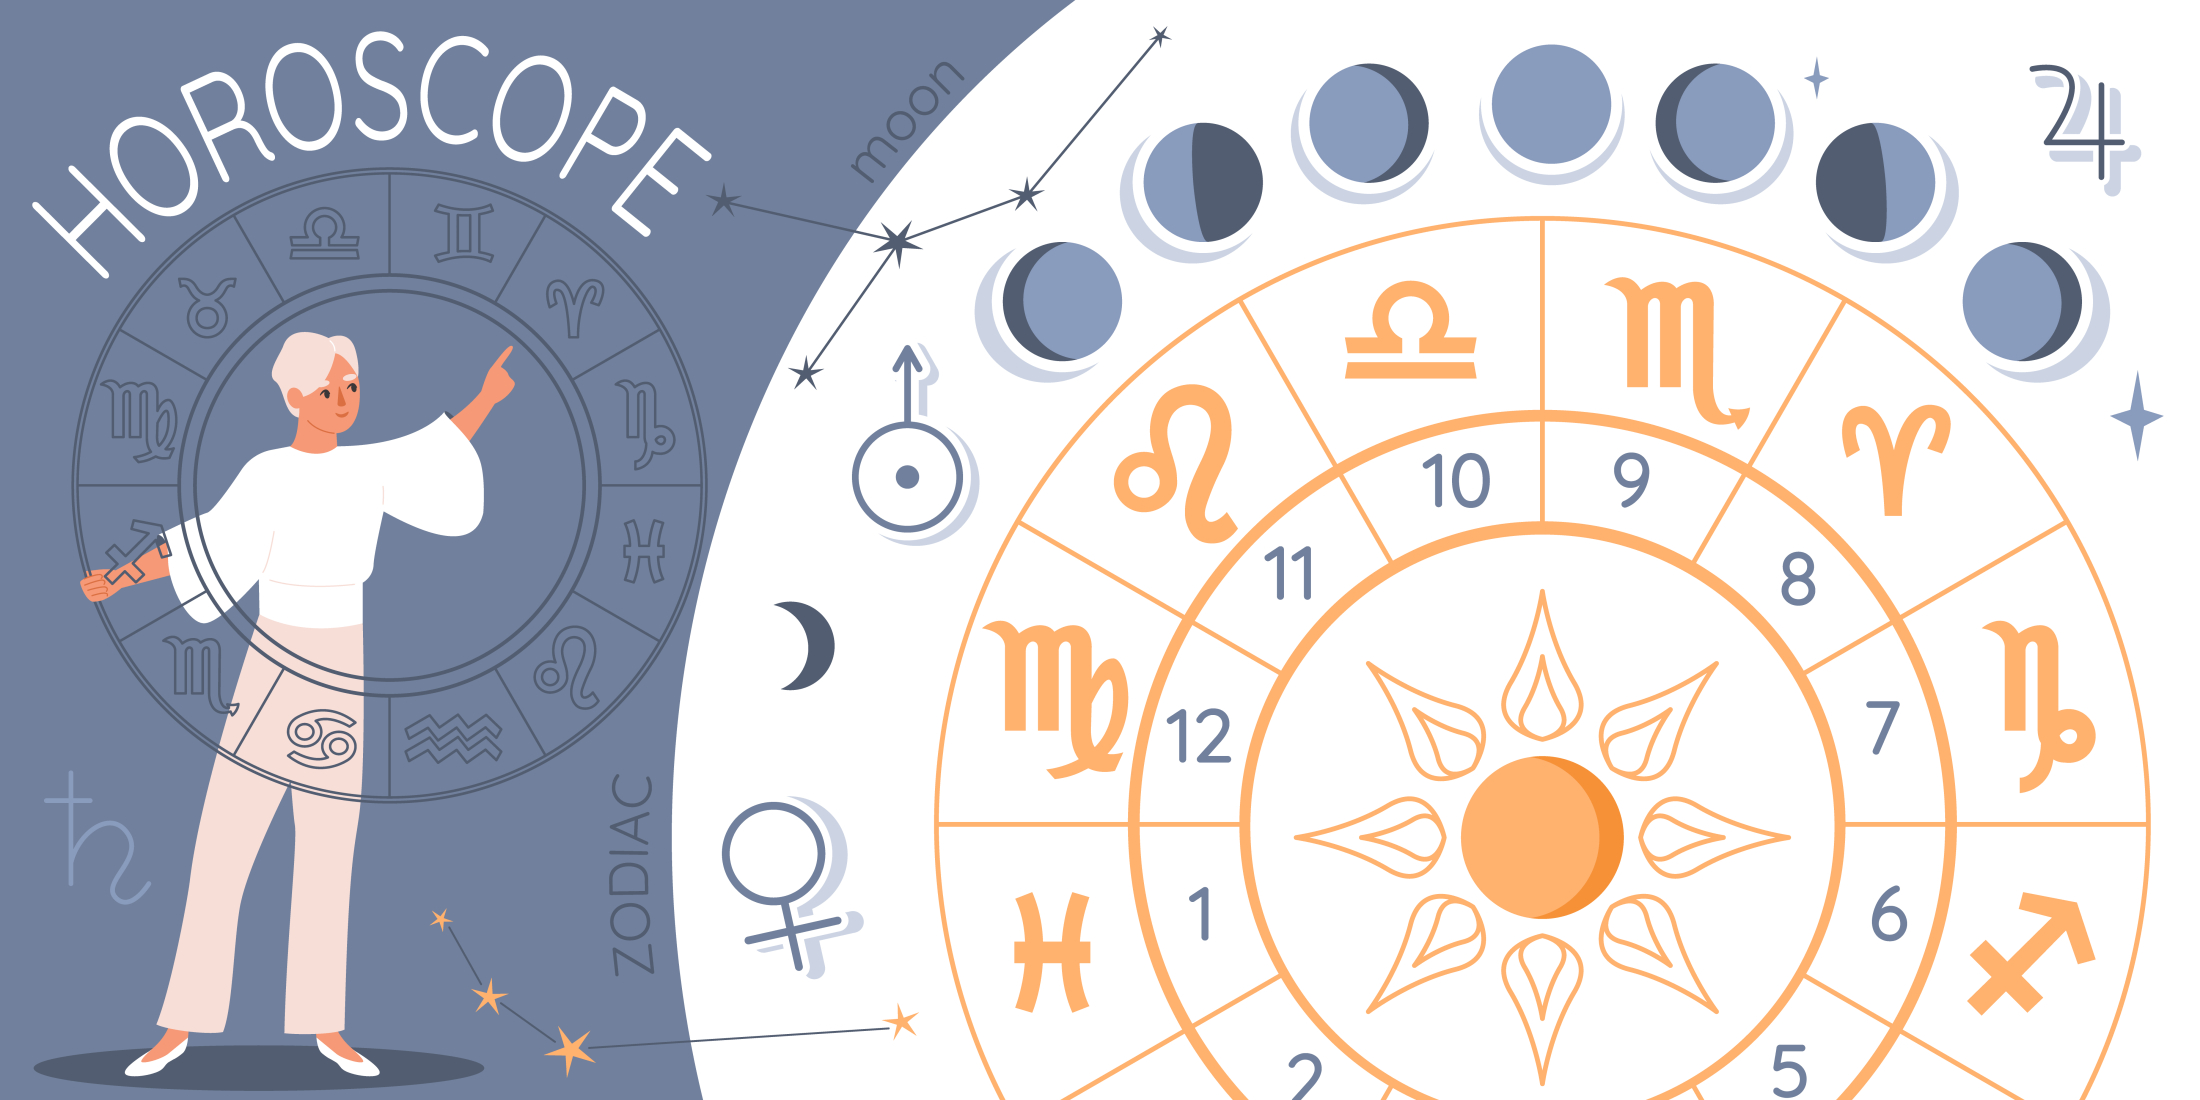 2305.q894.025.S.m009.c12.horoscope zodiac flat collage.jpg